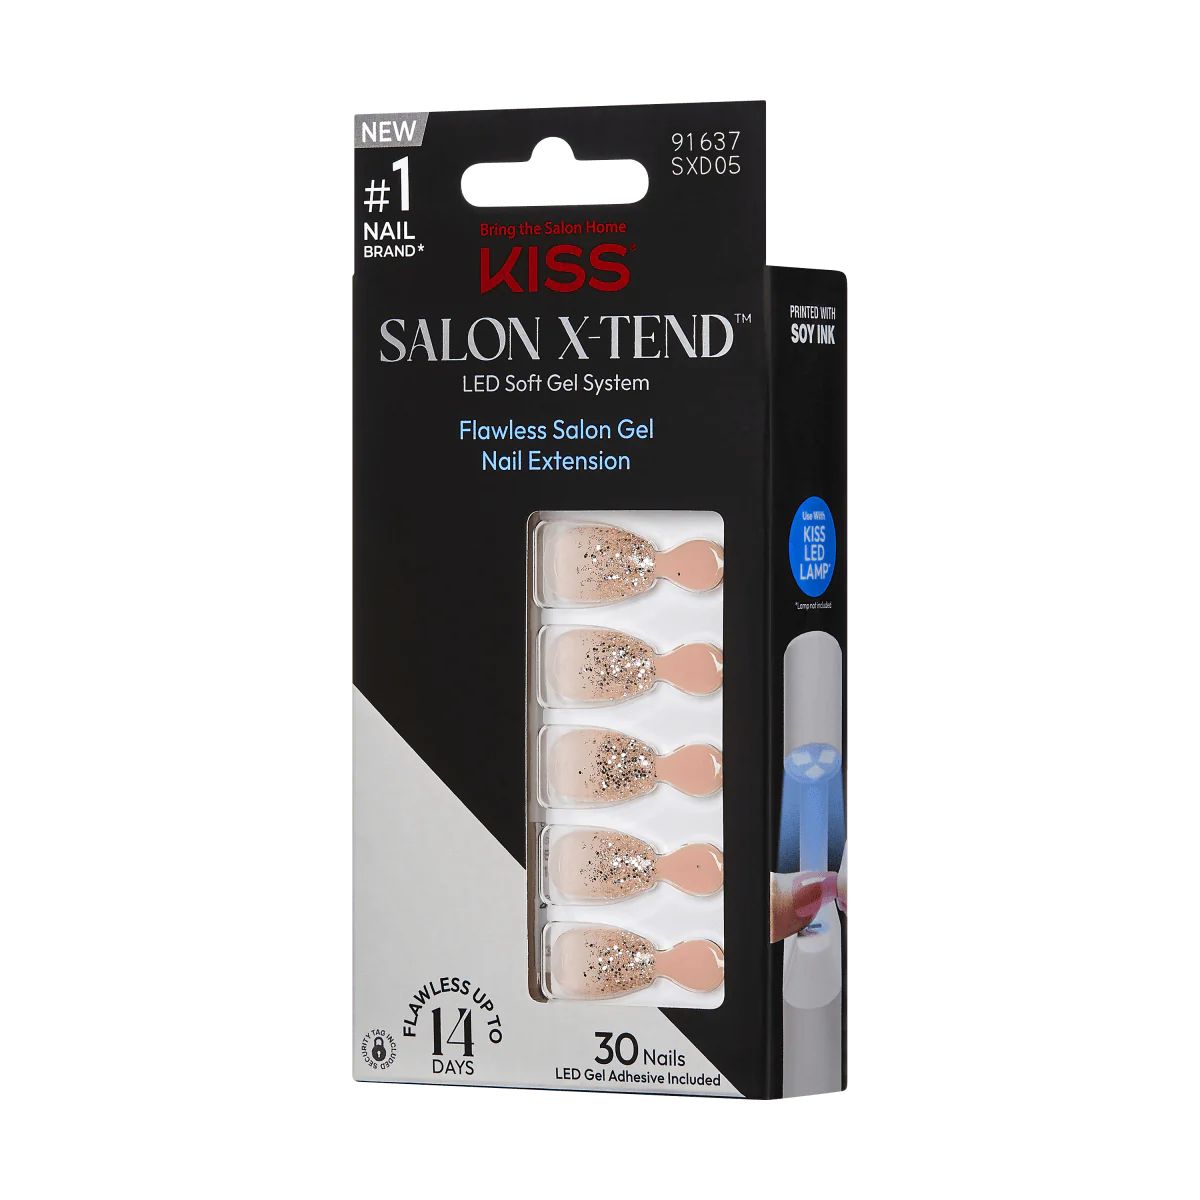 KISS Salon X-tend LED Soft Gel System Decorated Nails, Silver, Short Coffin, 34 Ct. | KISS, imPRESS, JOAH